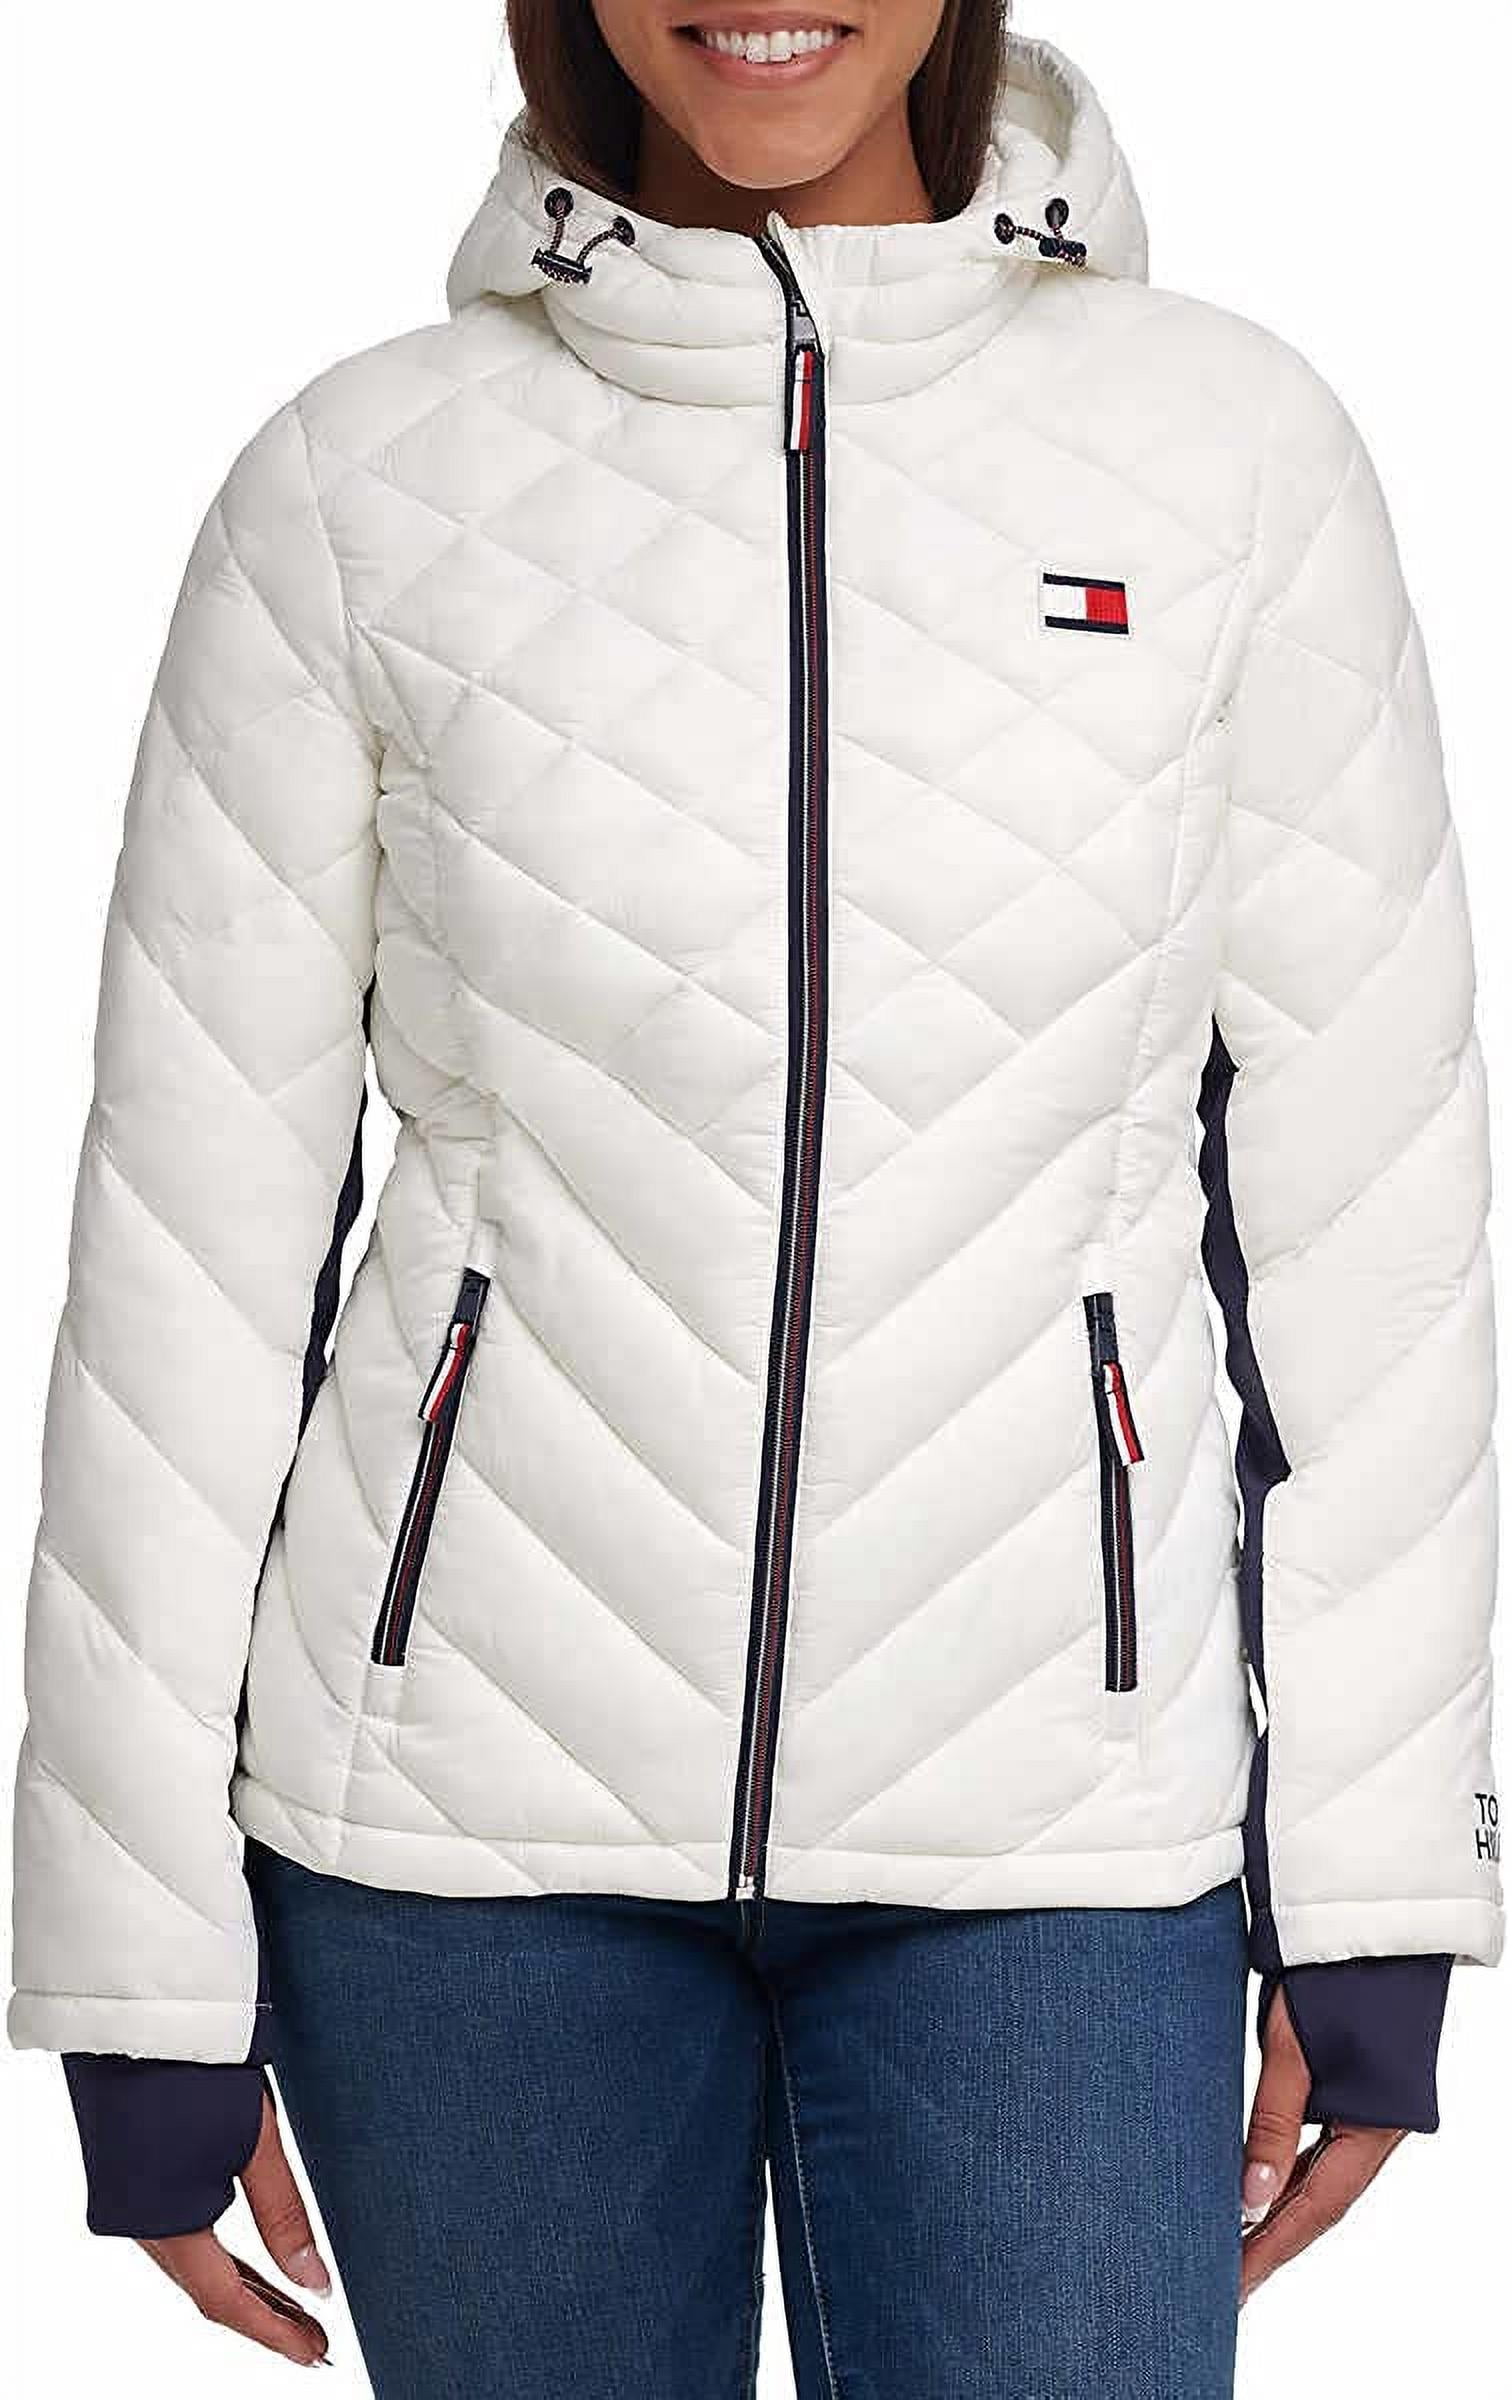 Gezond eten Toestemming Notitie Tommy Hilfiger Womens Packable Hooded Puffer Jacket(White,XL) - Walmart.com